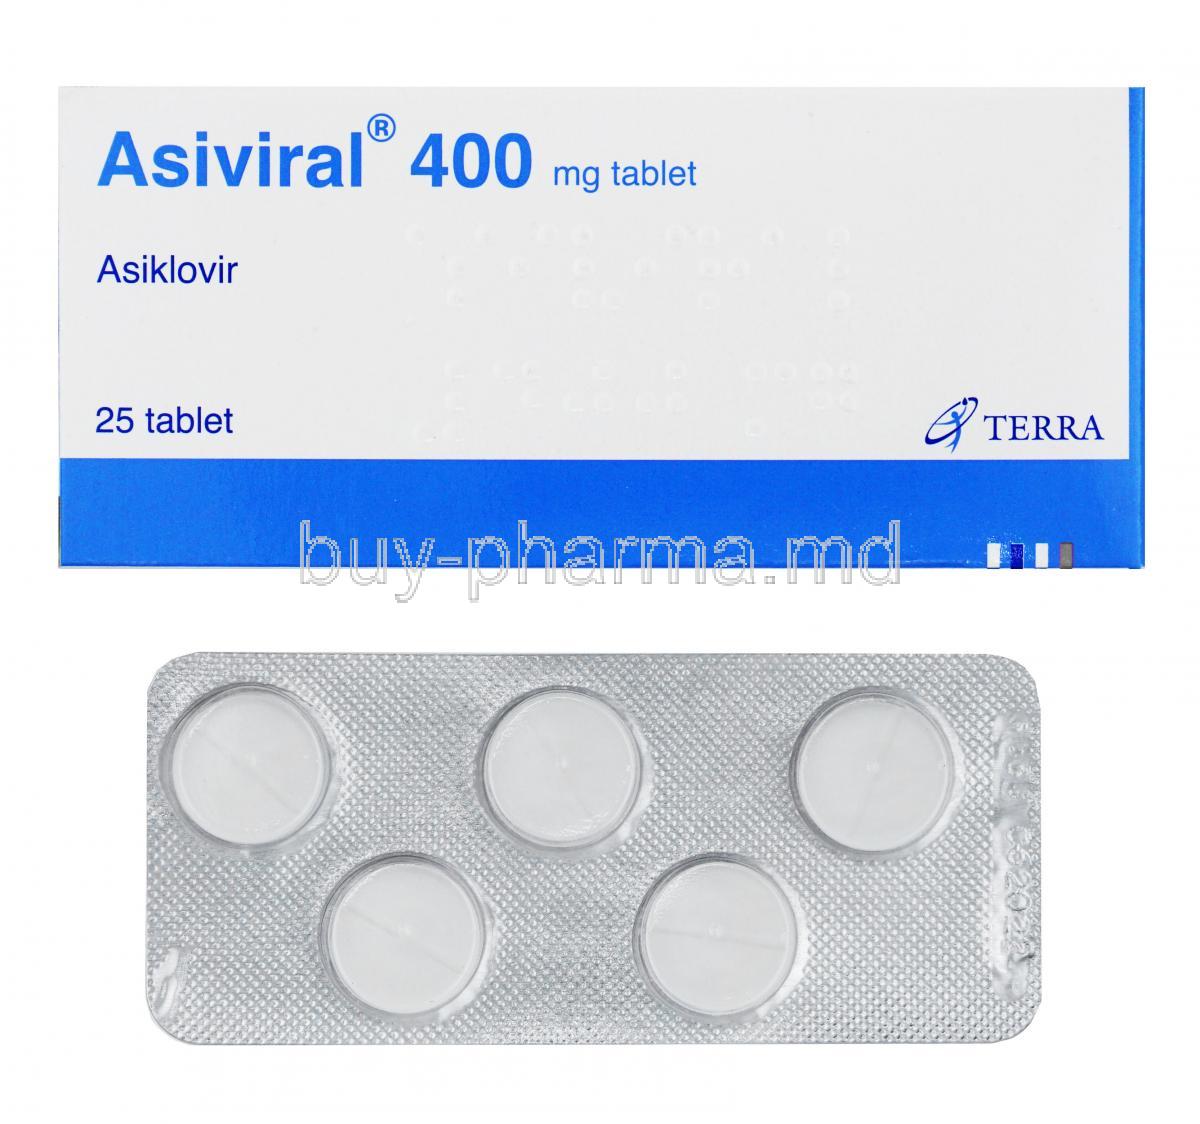 Asiviral 400 mg